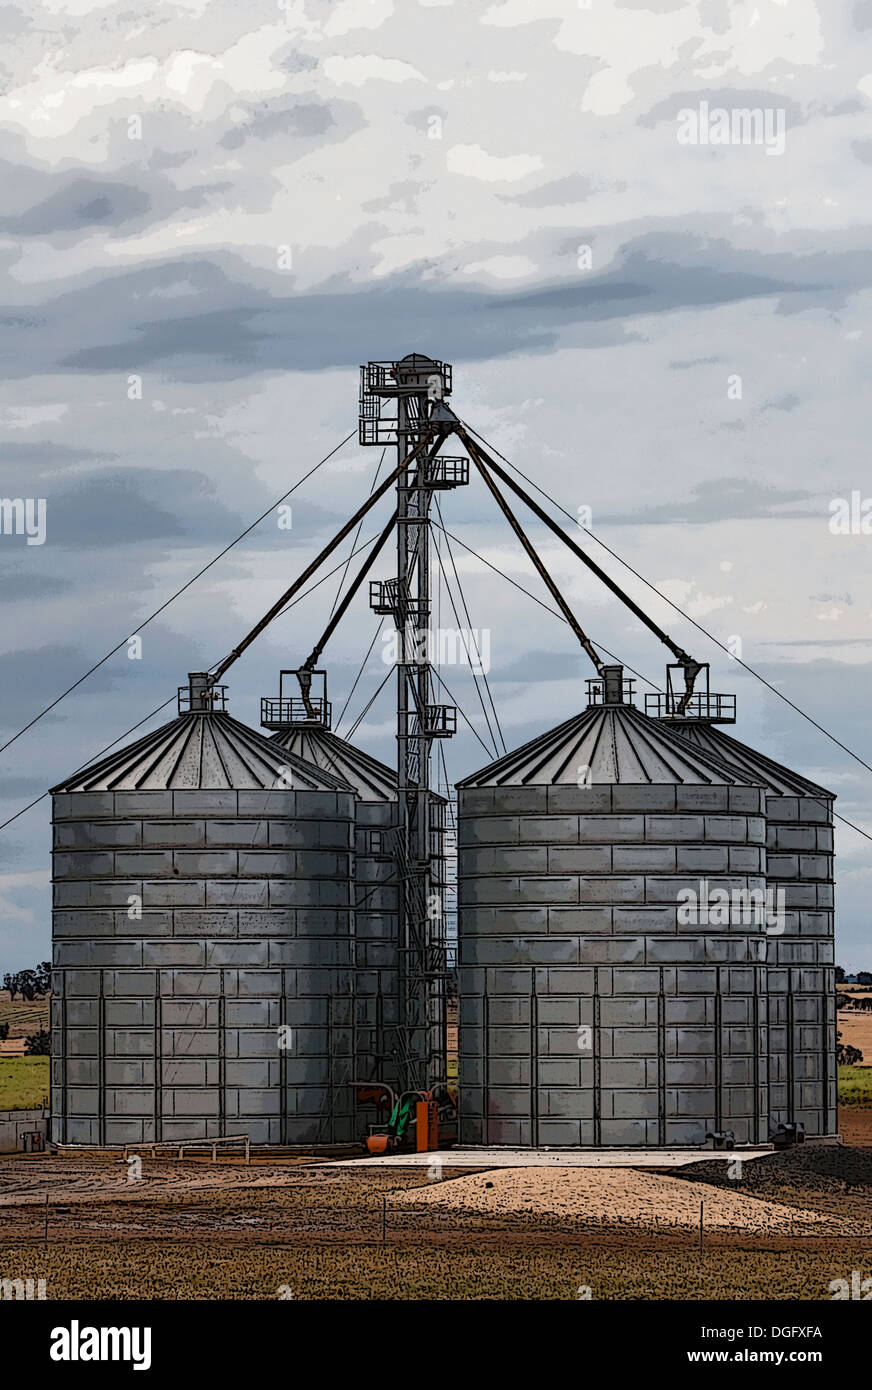 Posterized image of grain silos, Stock Photo